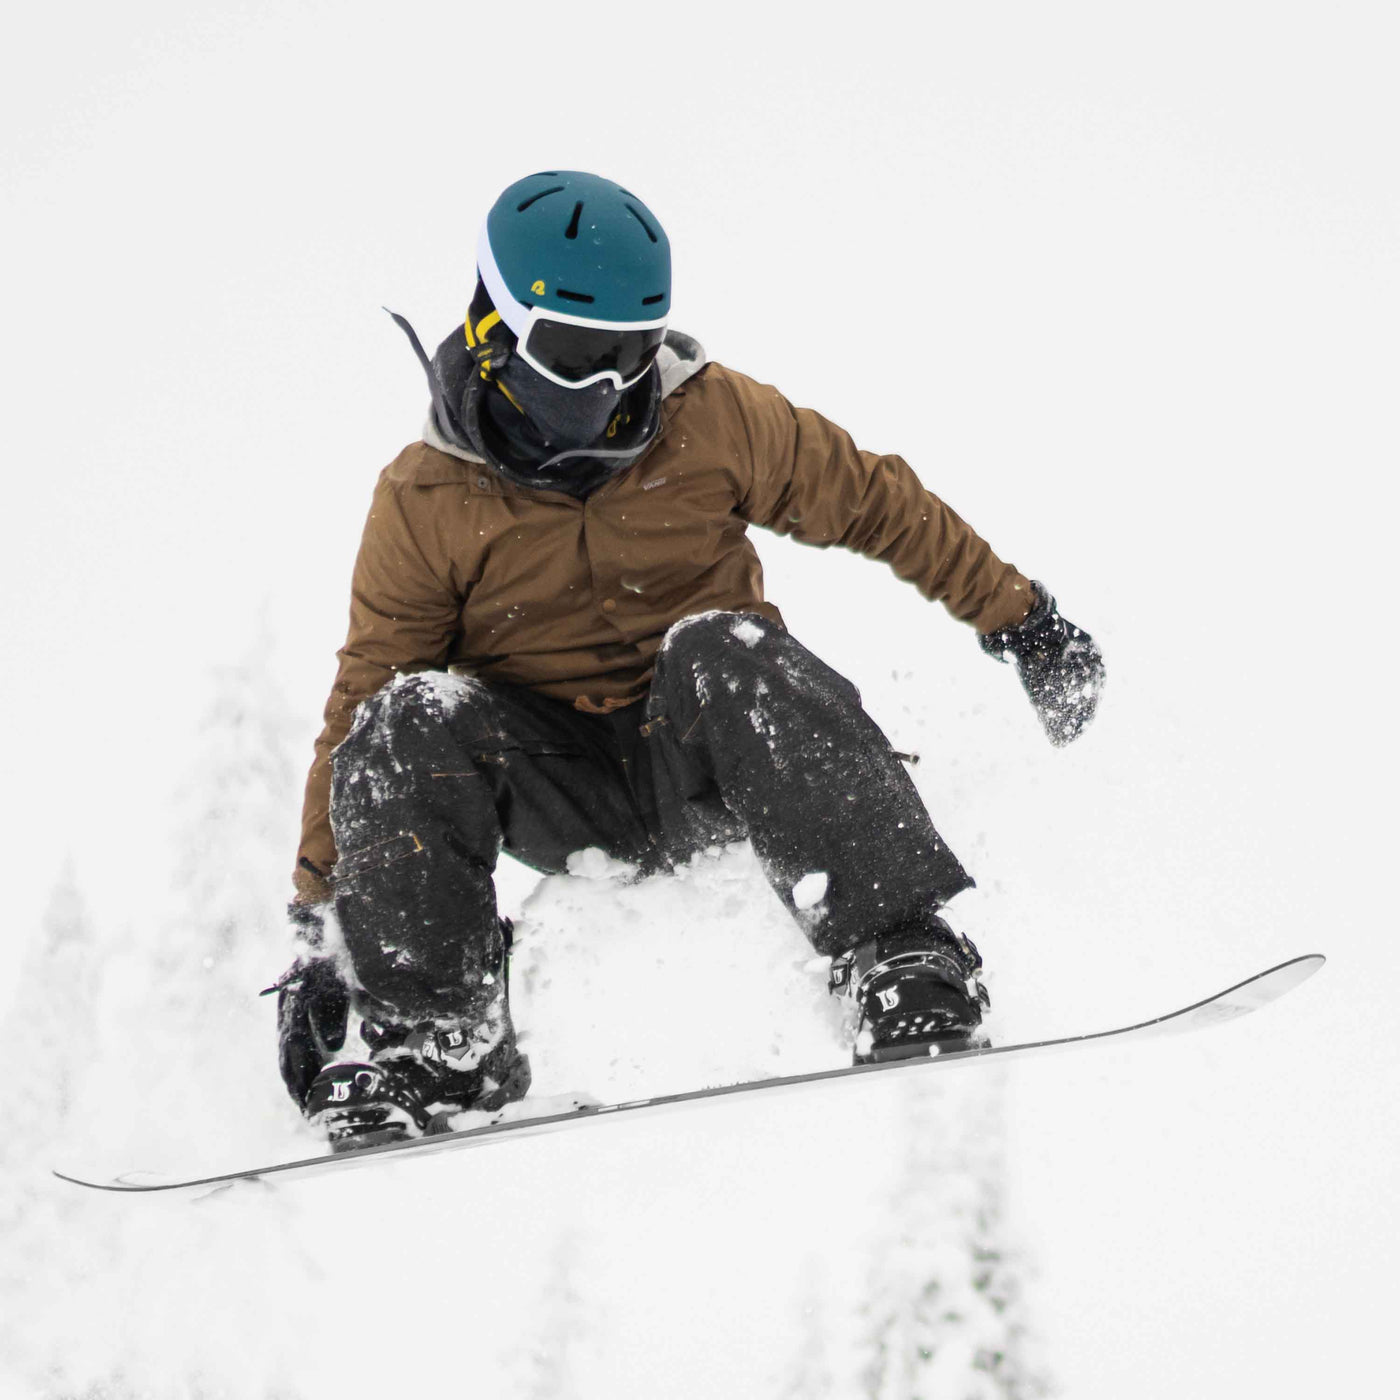 Comstock Ski & Snowboard Helmet